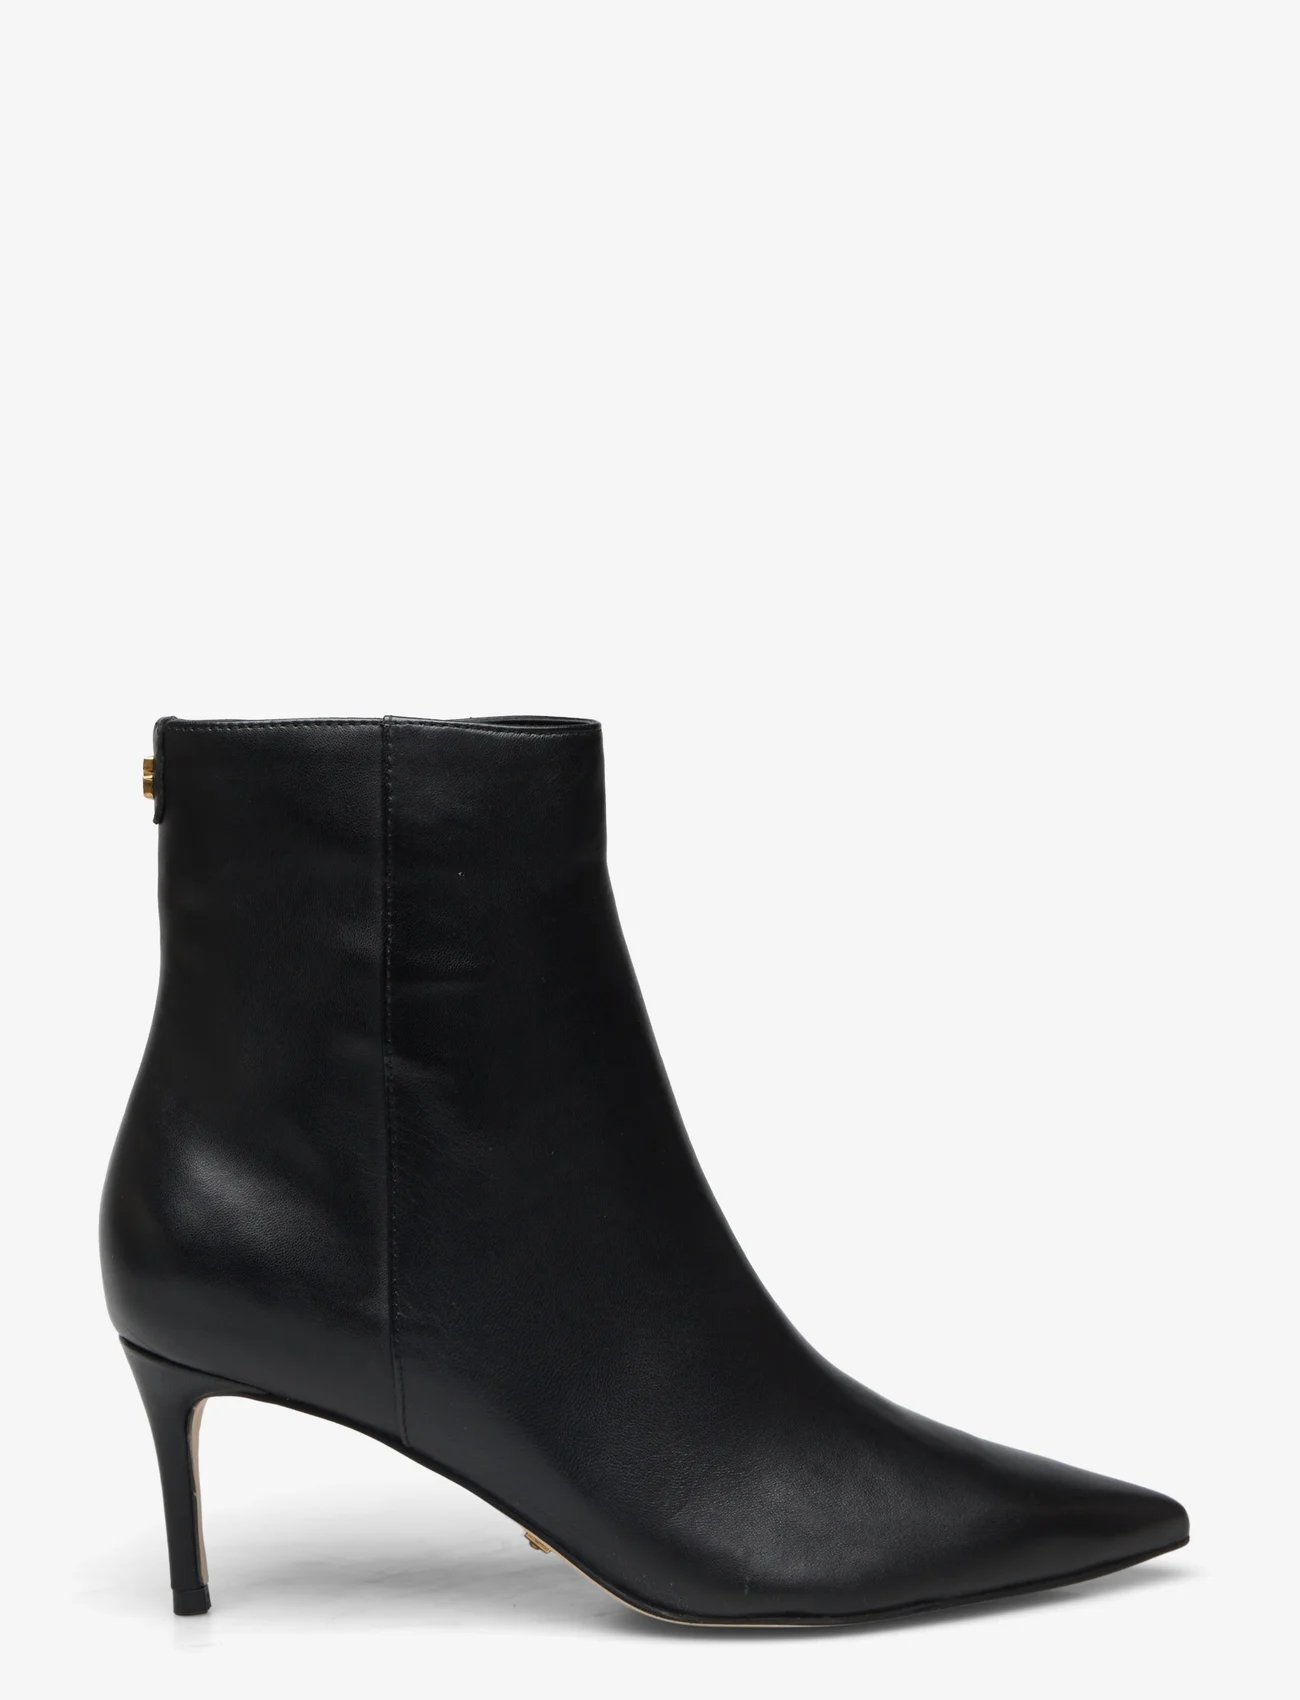 GUESS - BRAYAN - high heel - black - 1